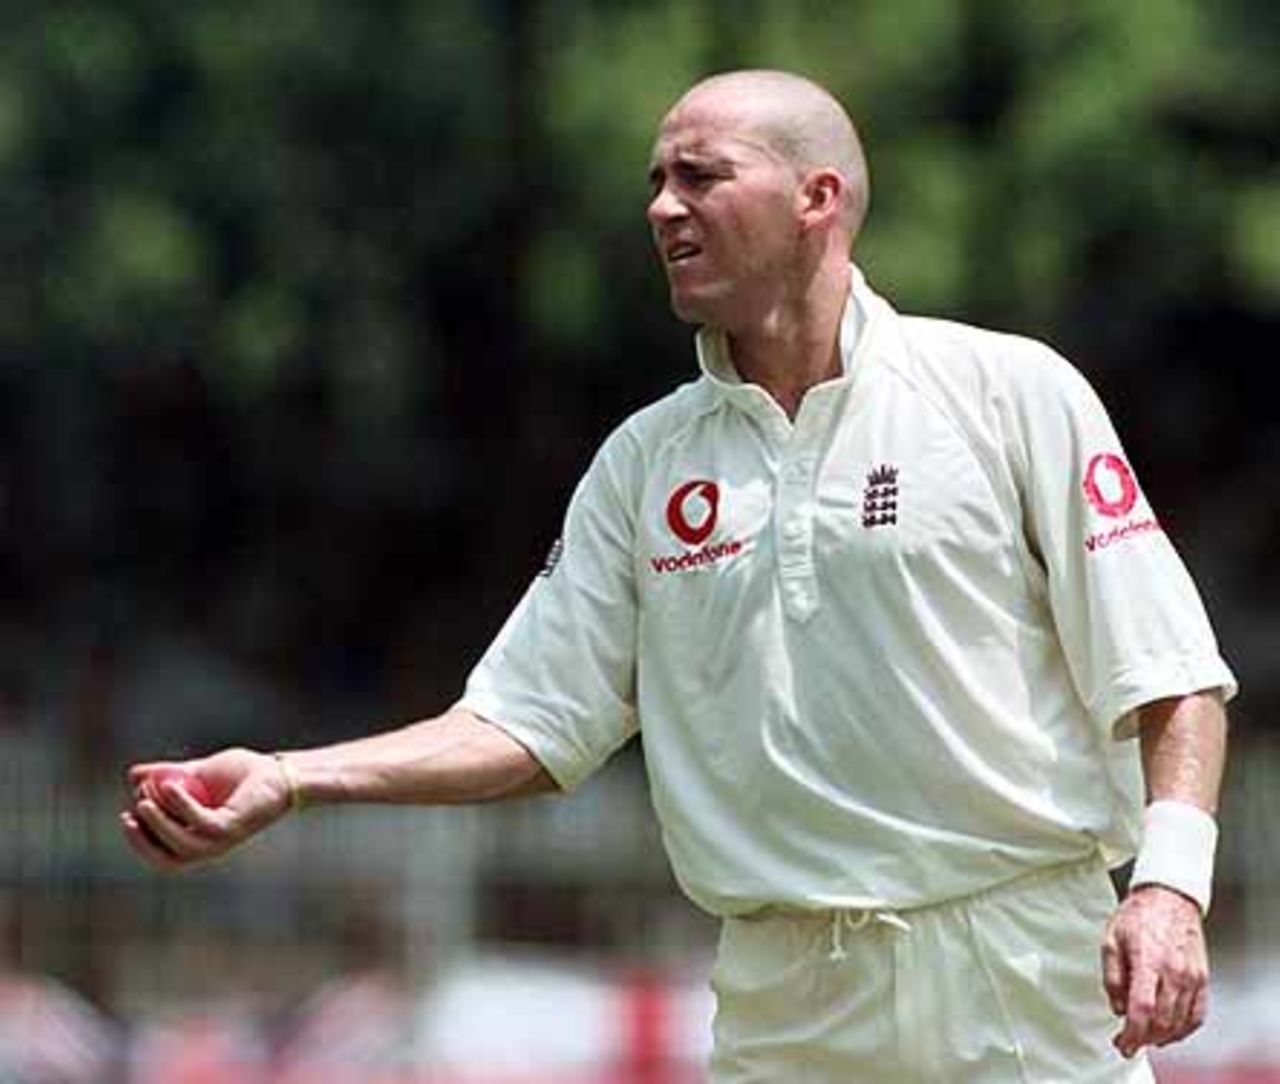 Sri Lanka v England 3rd Test at Colombo, 15-19 March 2001